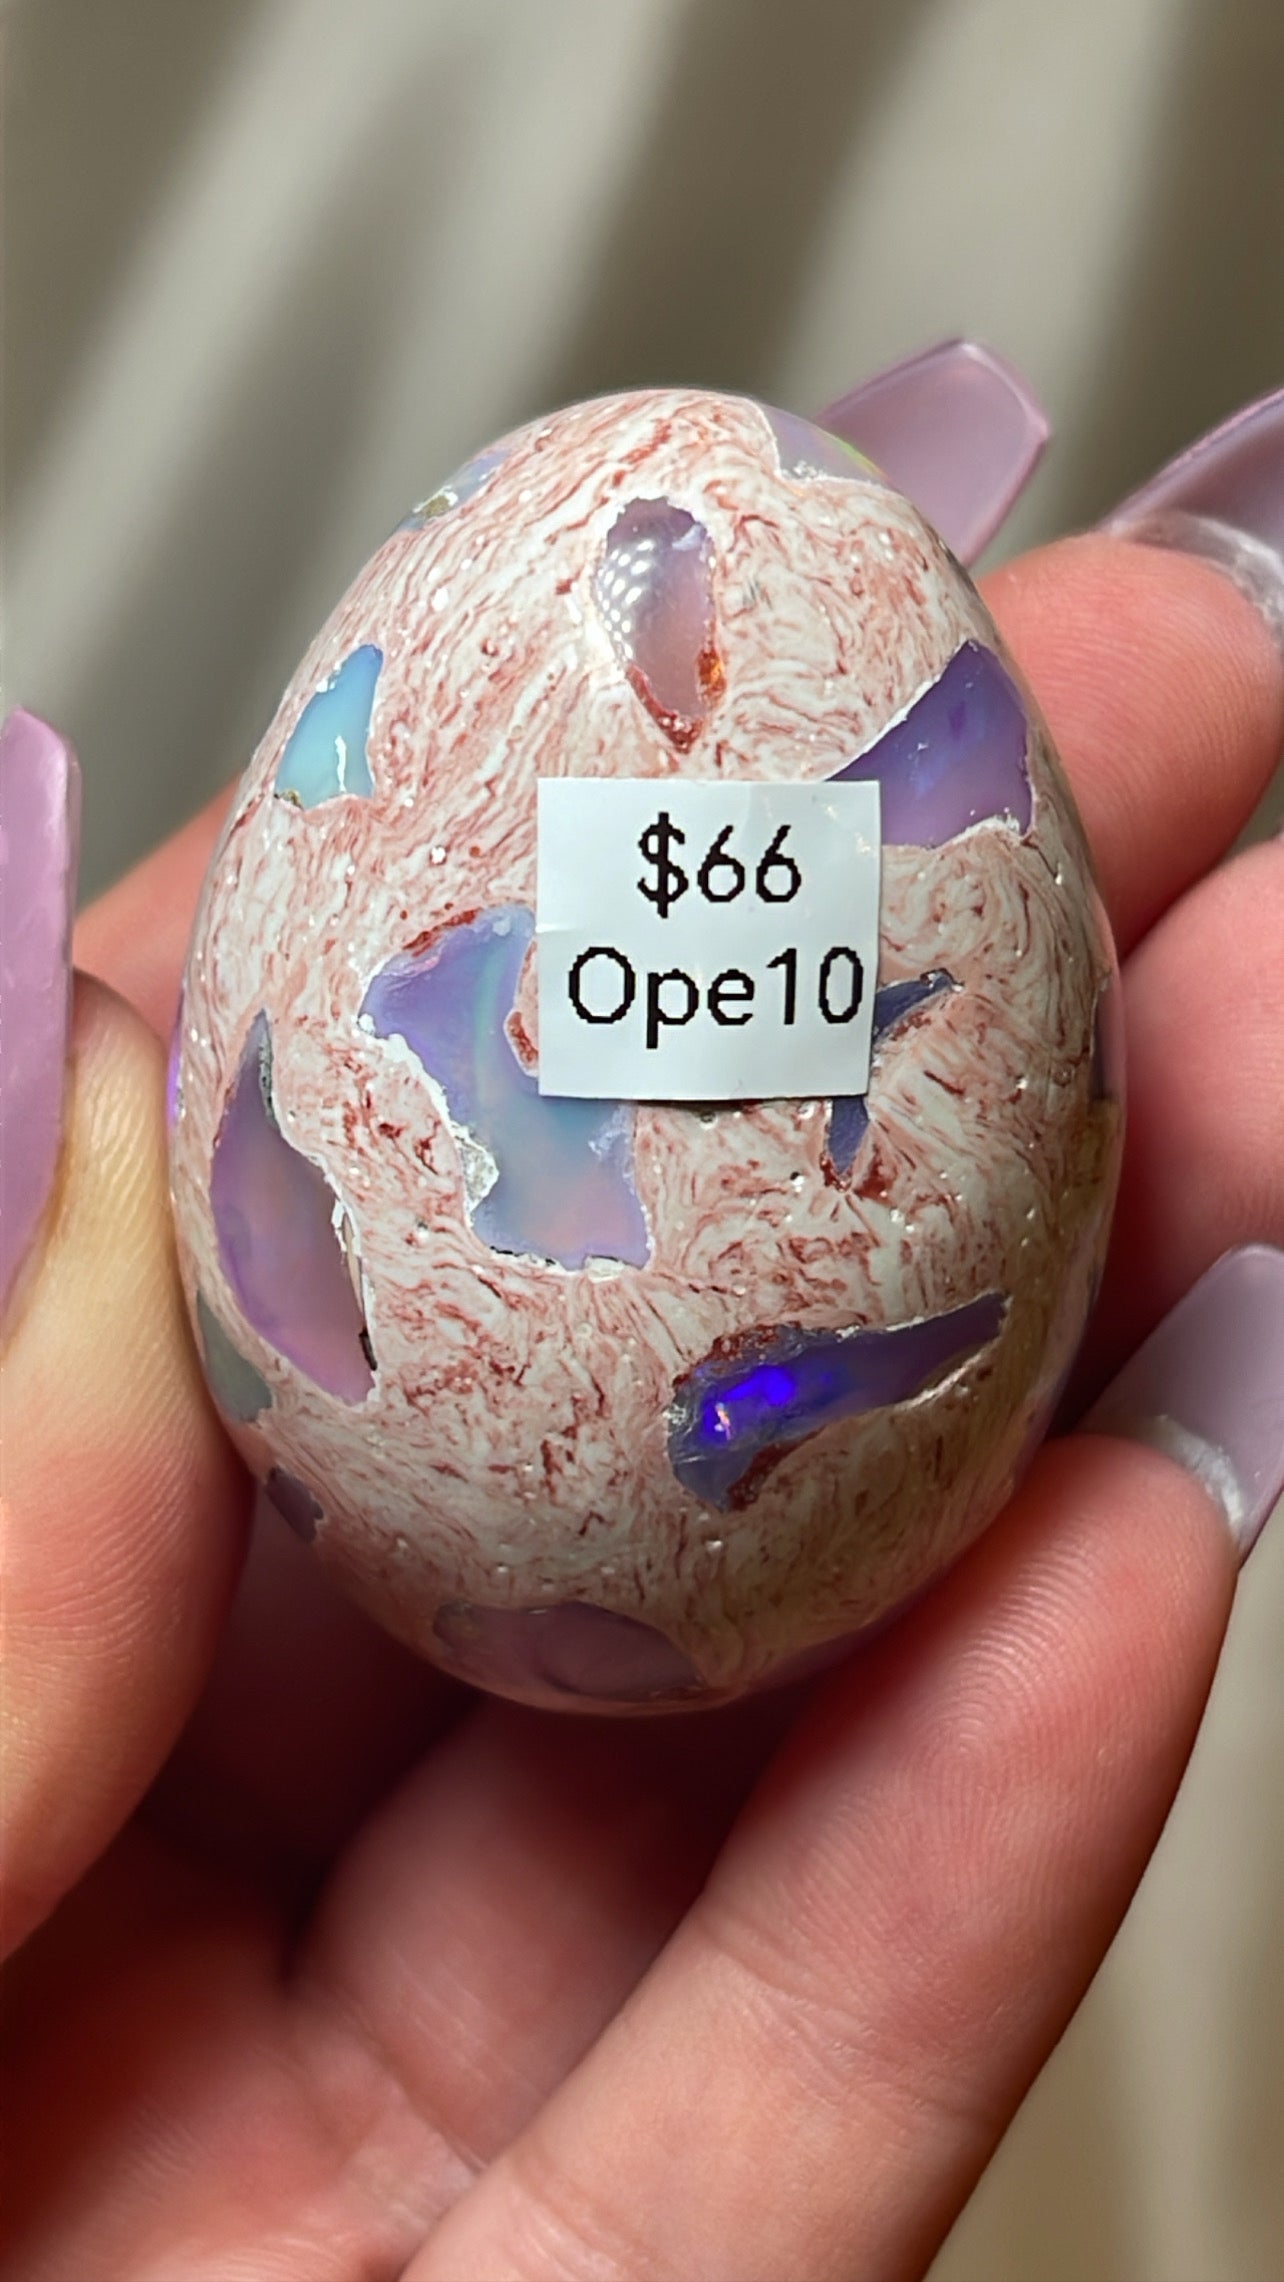 Mexican Fire Opal AAA Egg